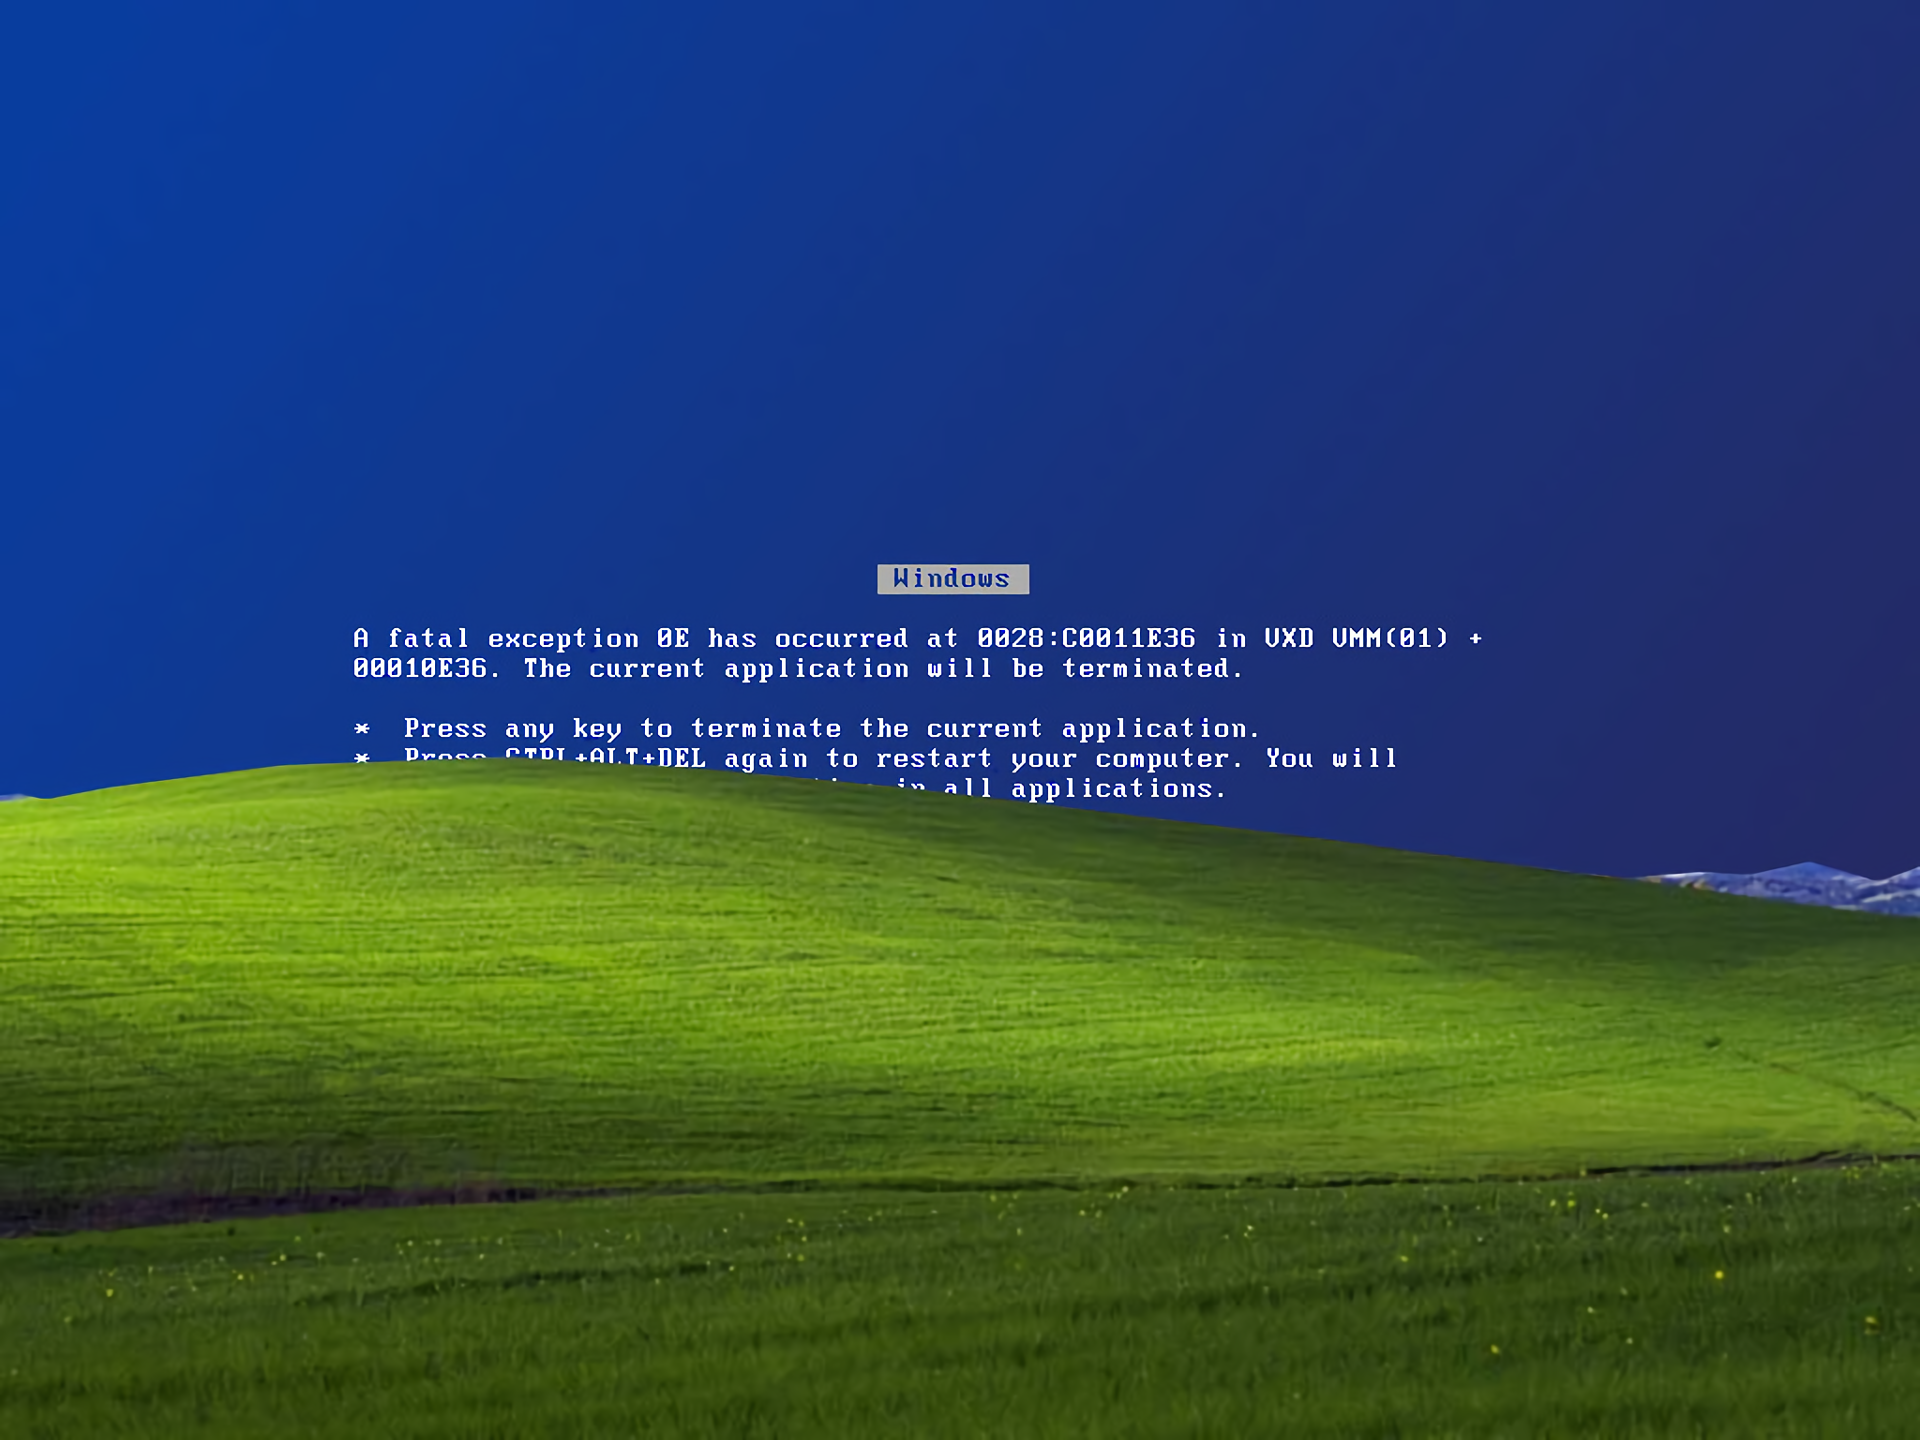 Windows desktop wallpaper